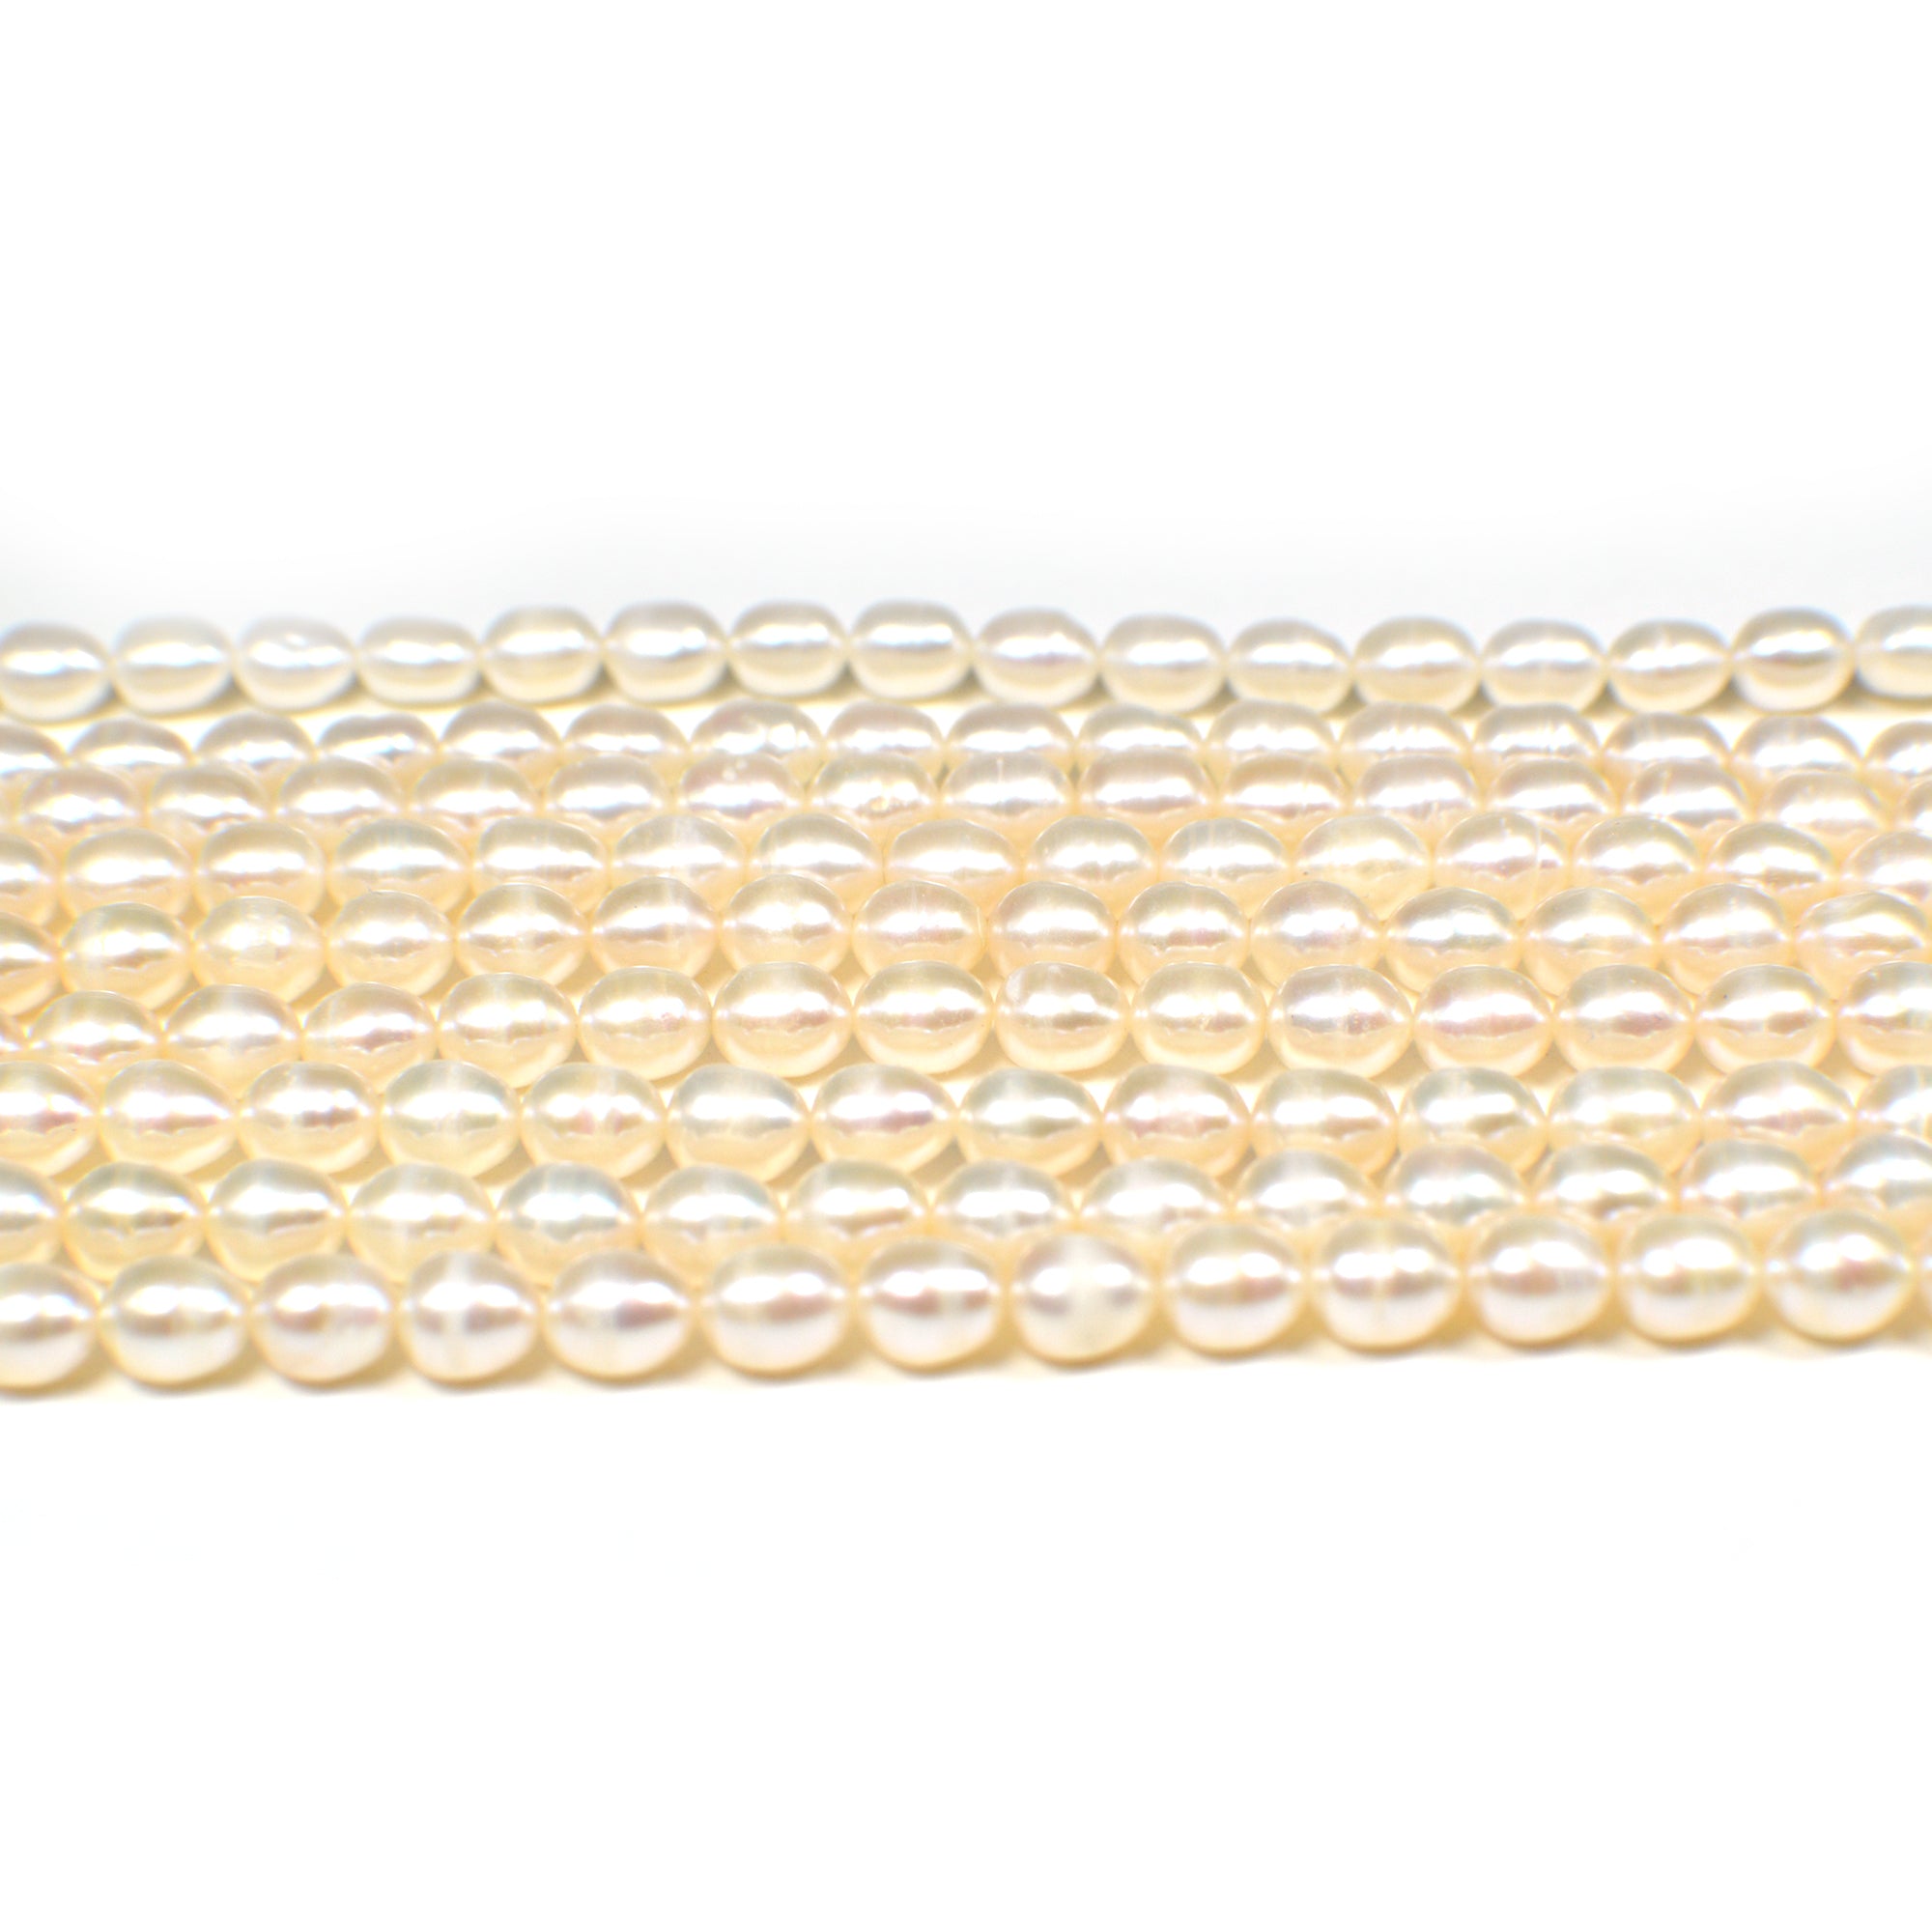 6x5 MM White Rice Freshwater Pearls Beads